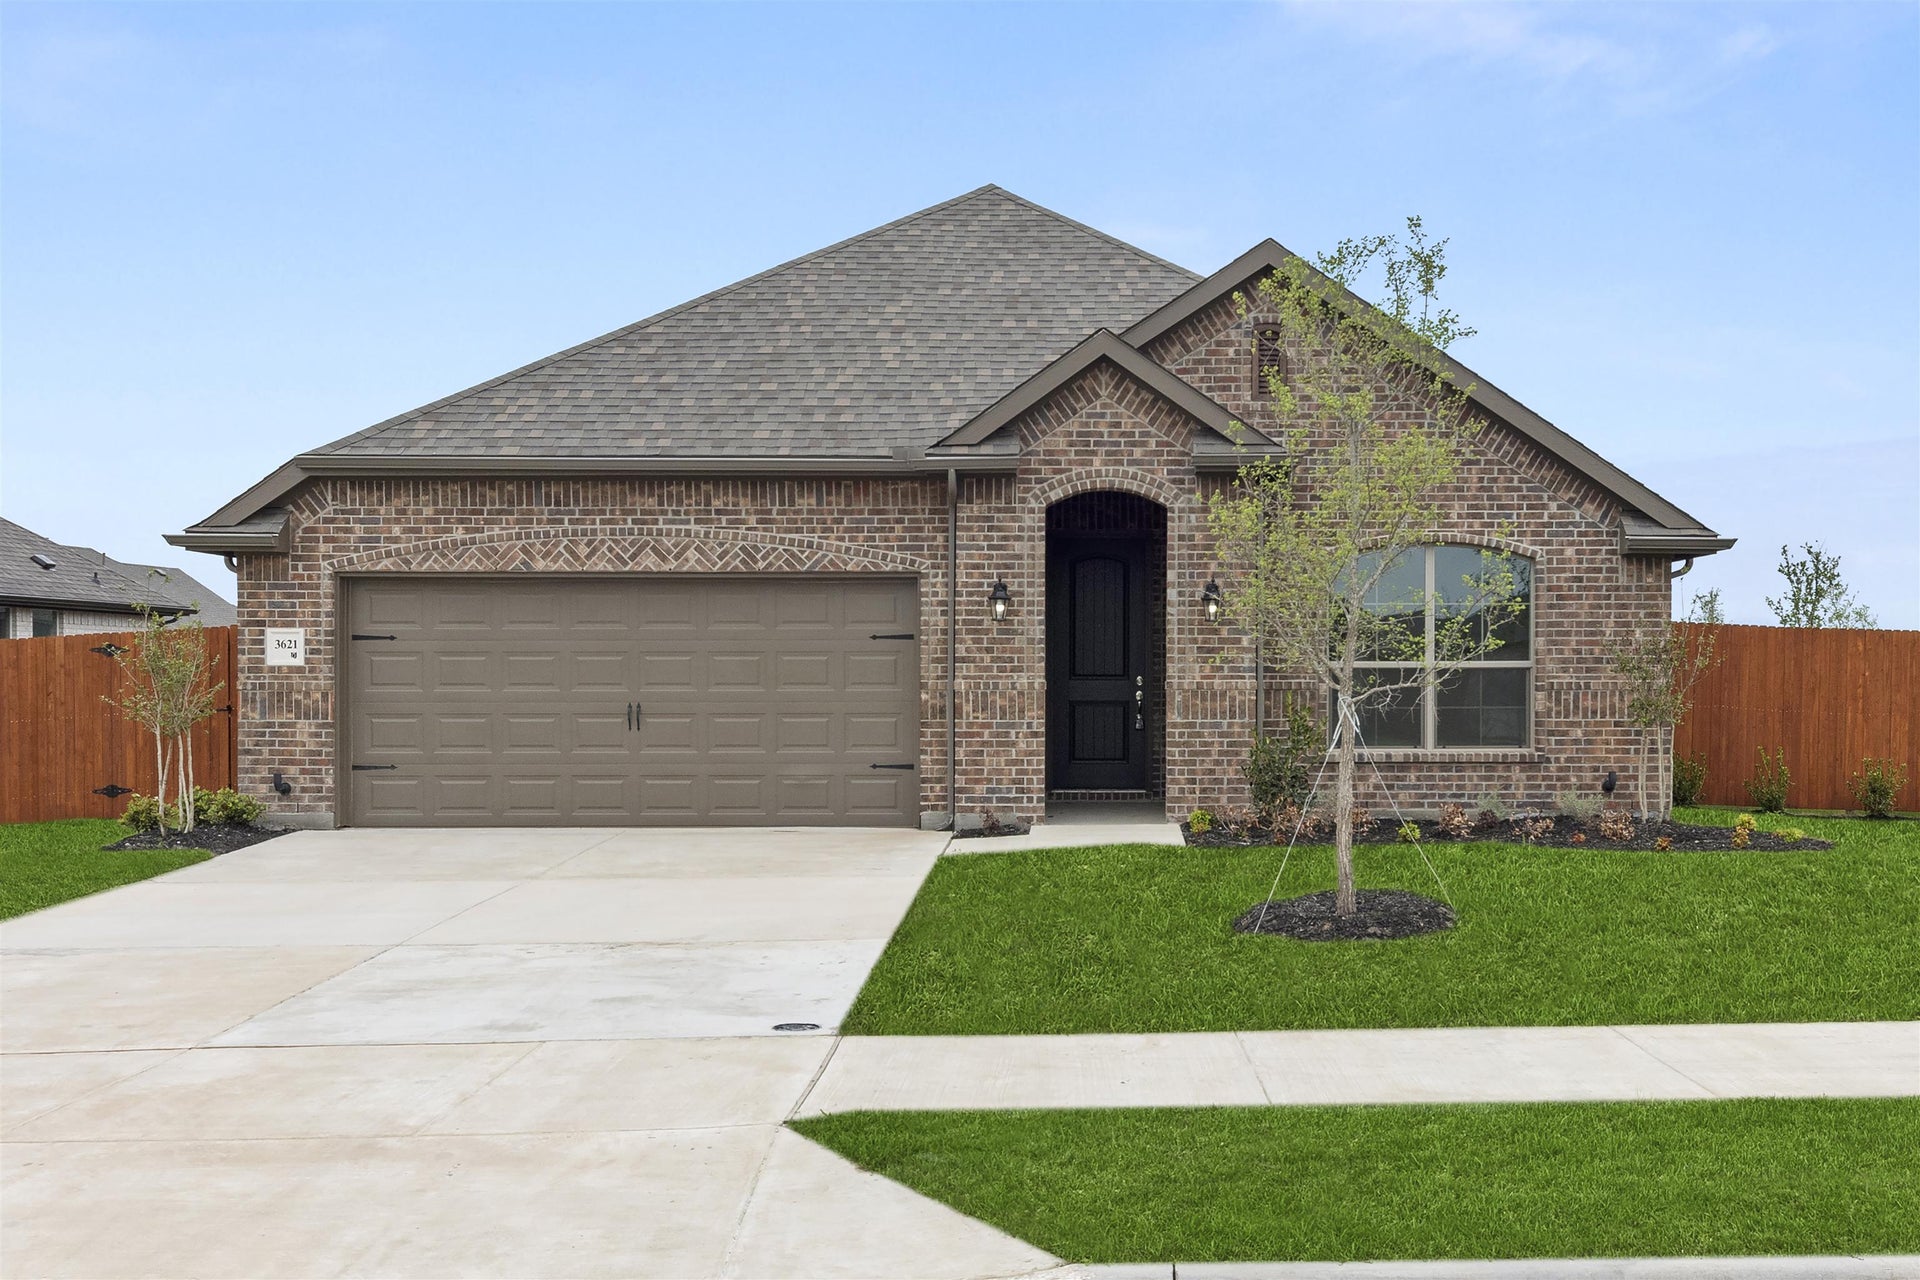 2,186sf New Home in Heartland, TX